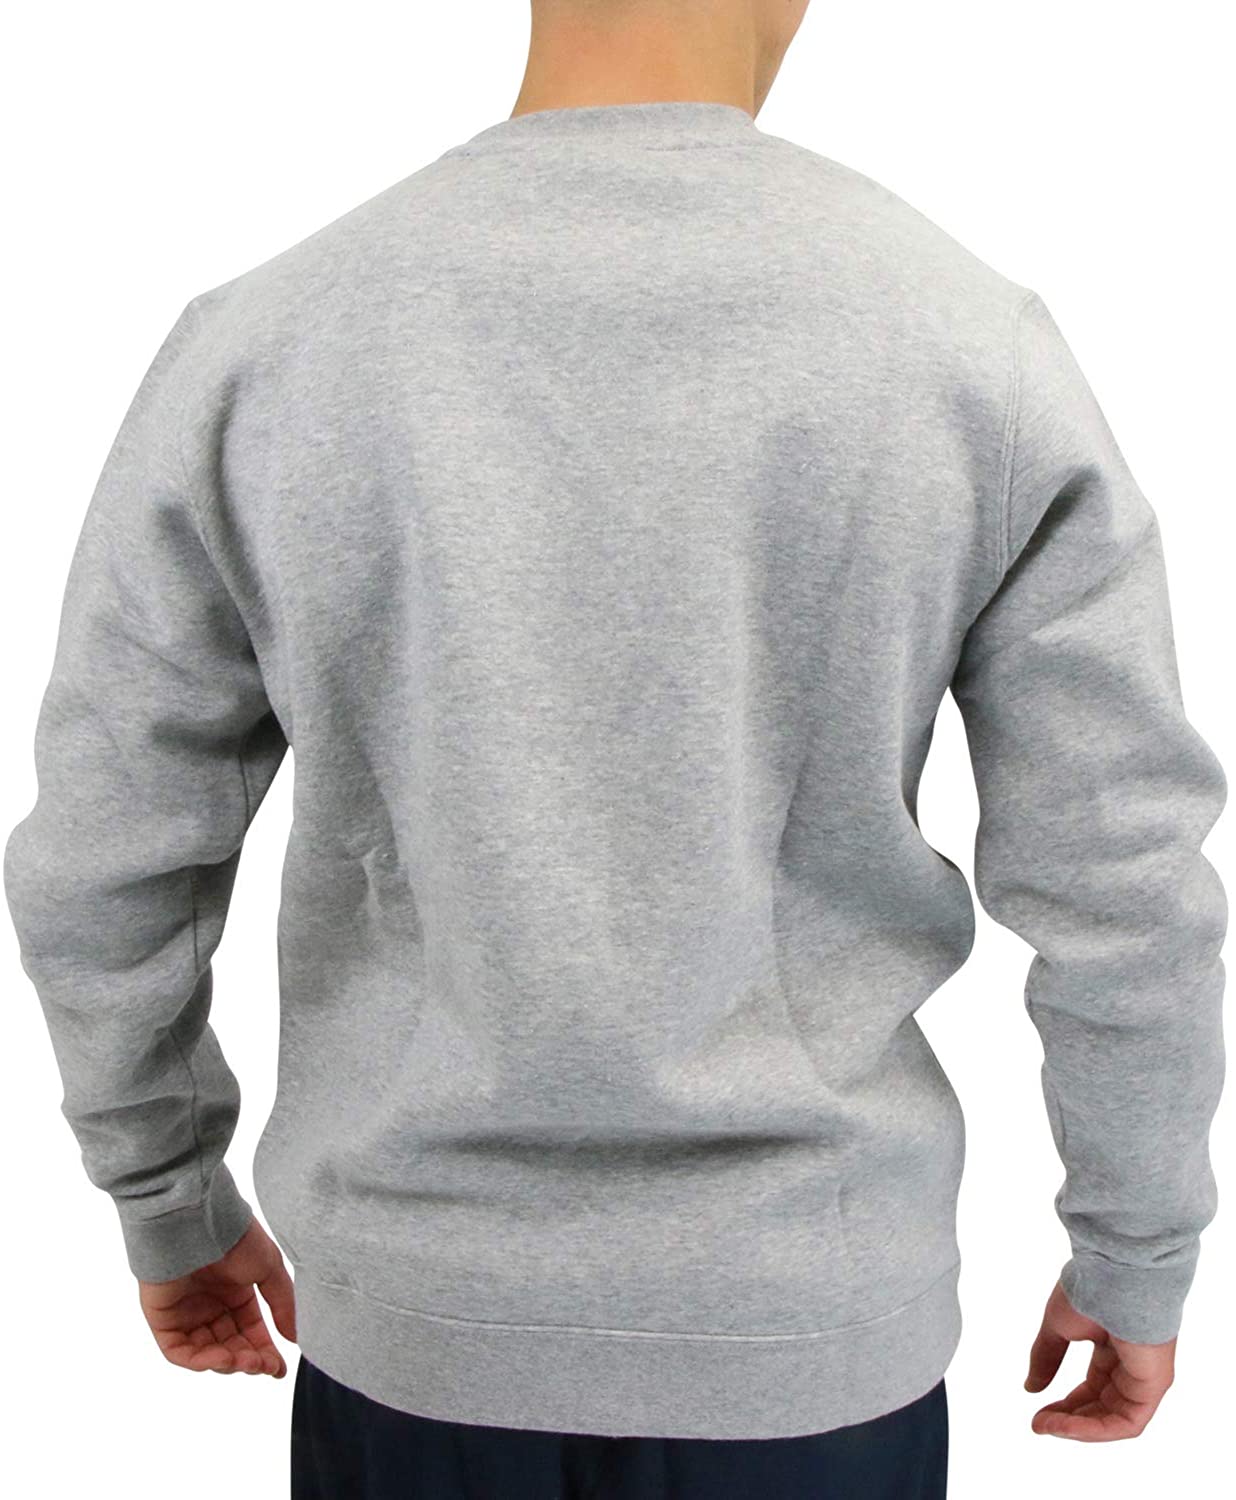 Nike Club Fleece Crew Neck Men's T-Shirt Grey Heather/White 804340-063 - image 3 of 5